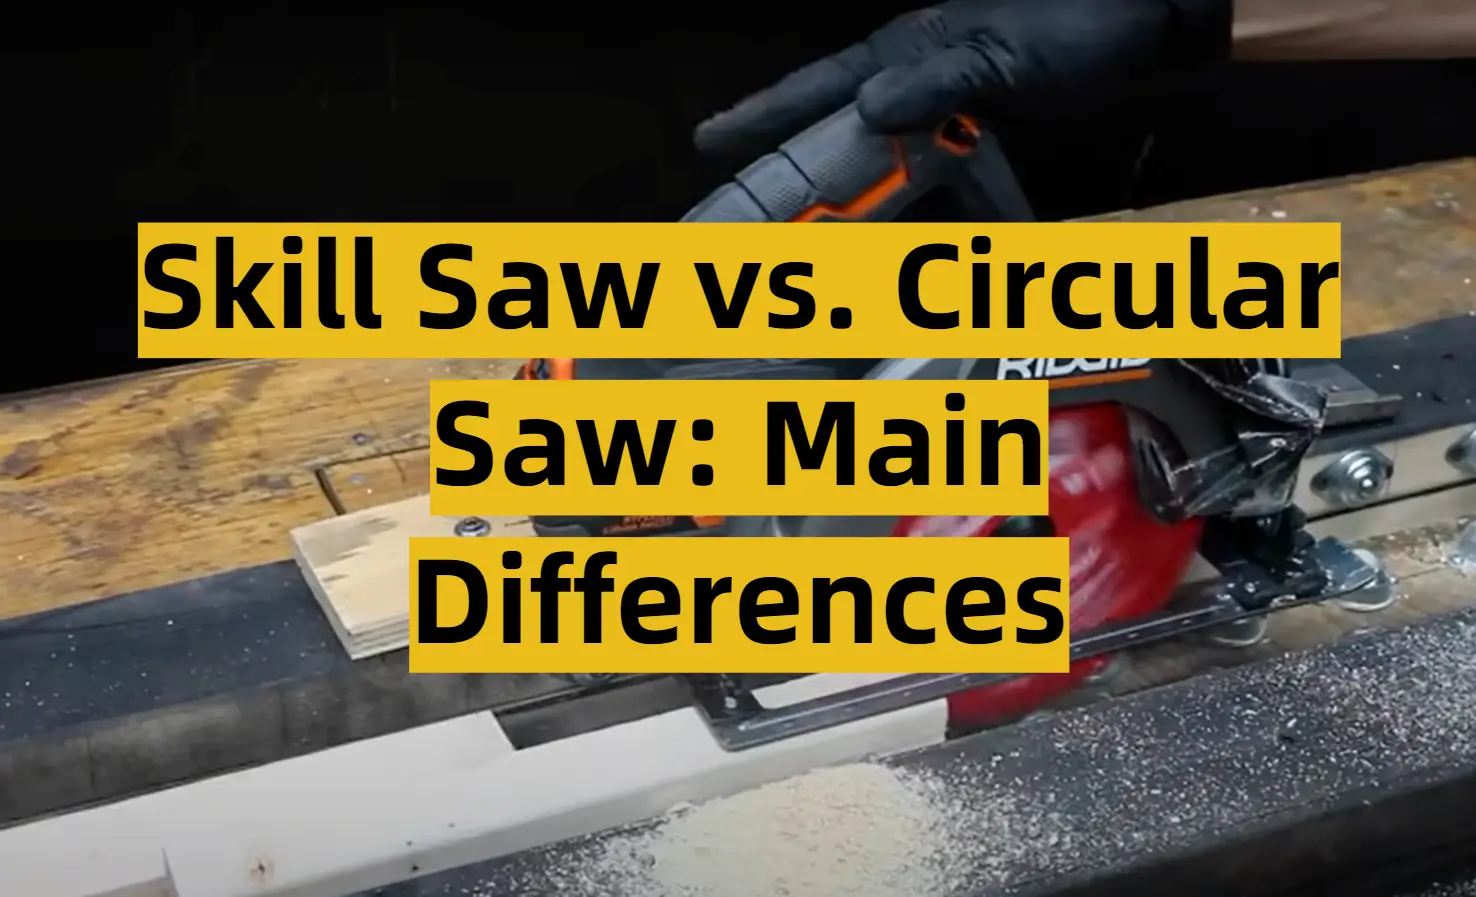 Skill Saw vs. Circular Saw: Main Differences